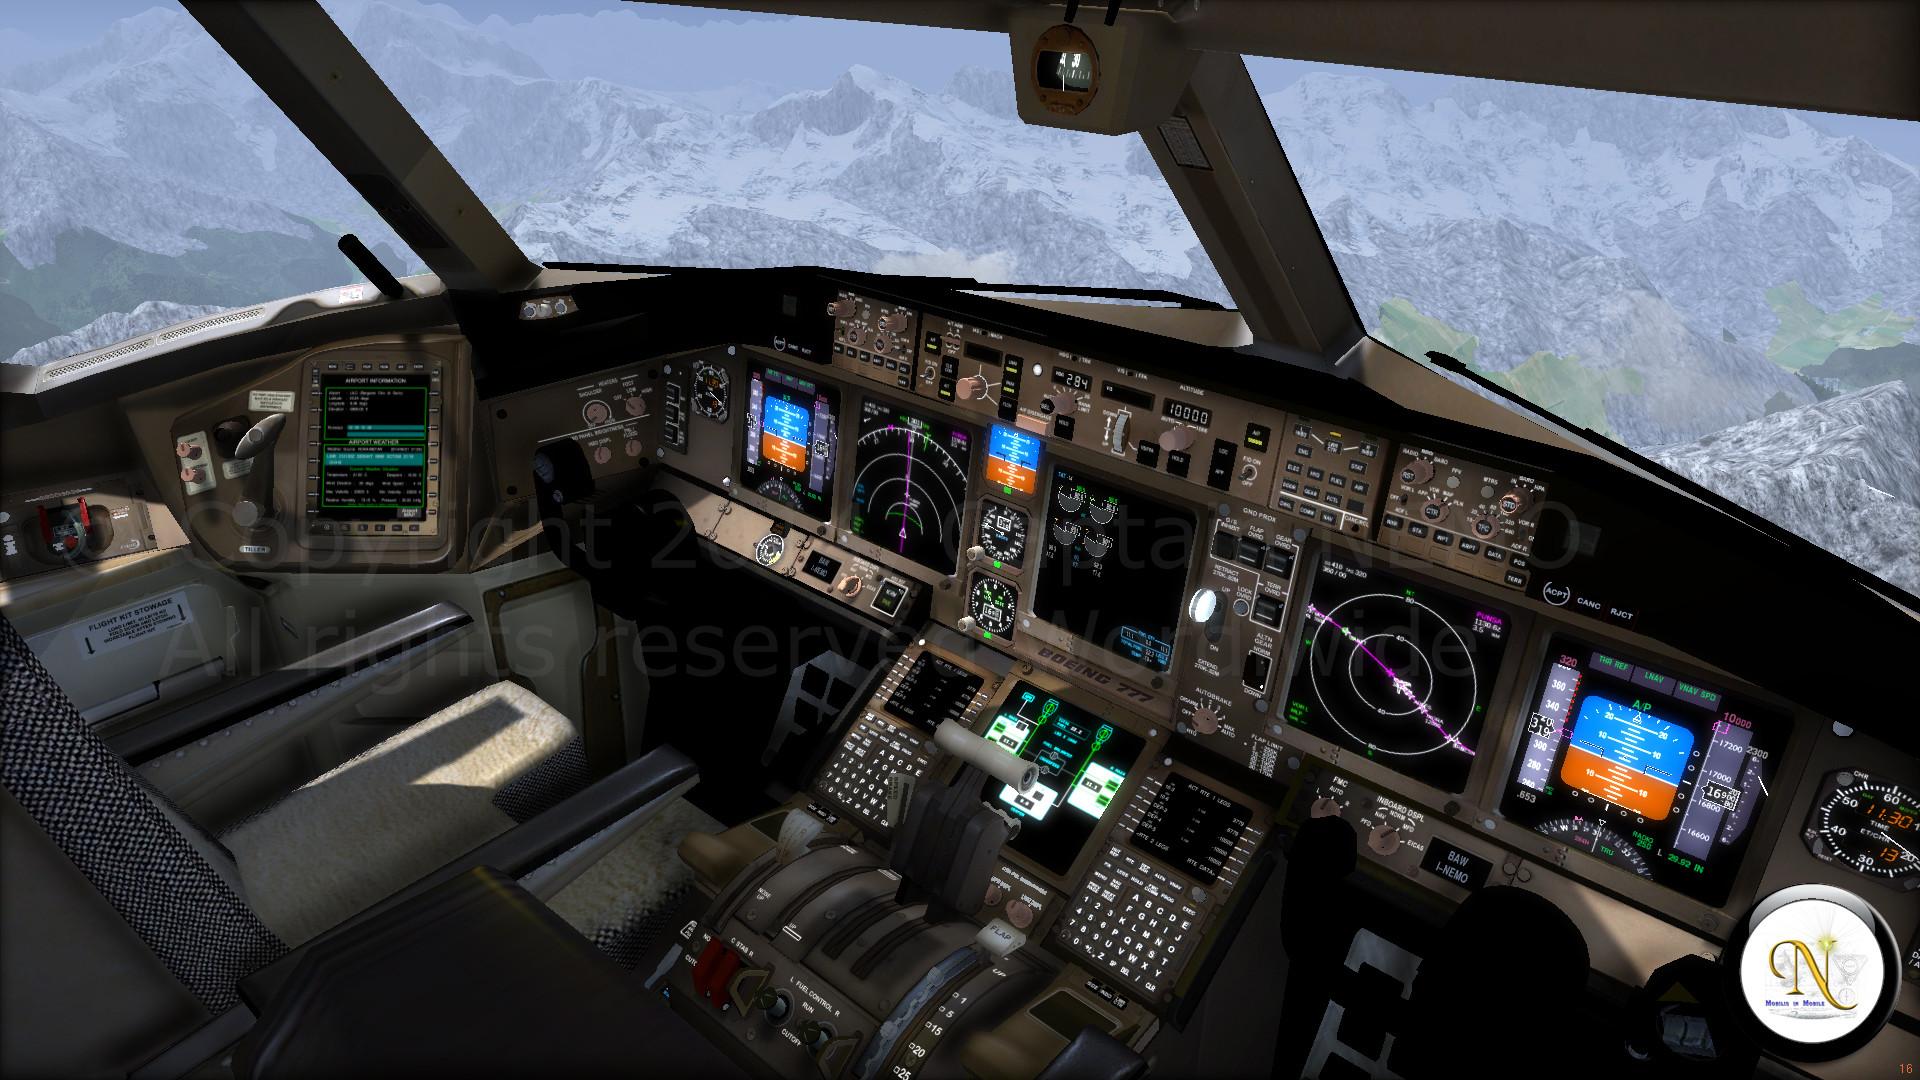 777x cockpit